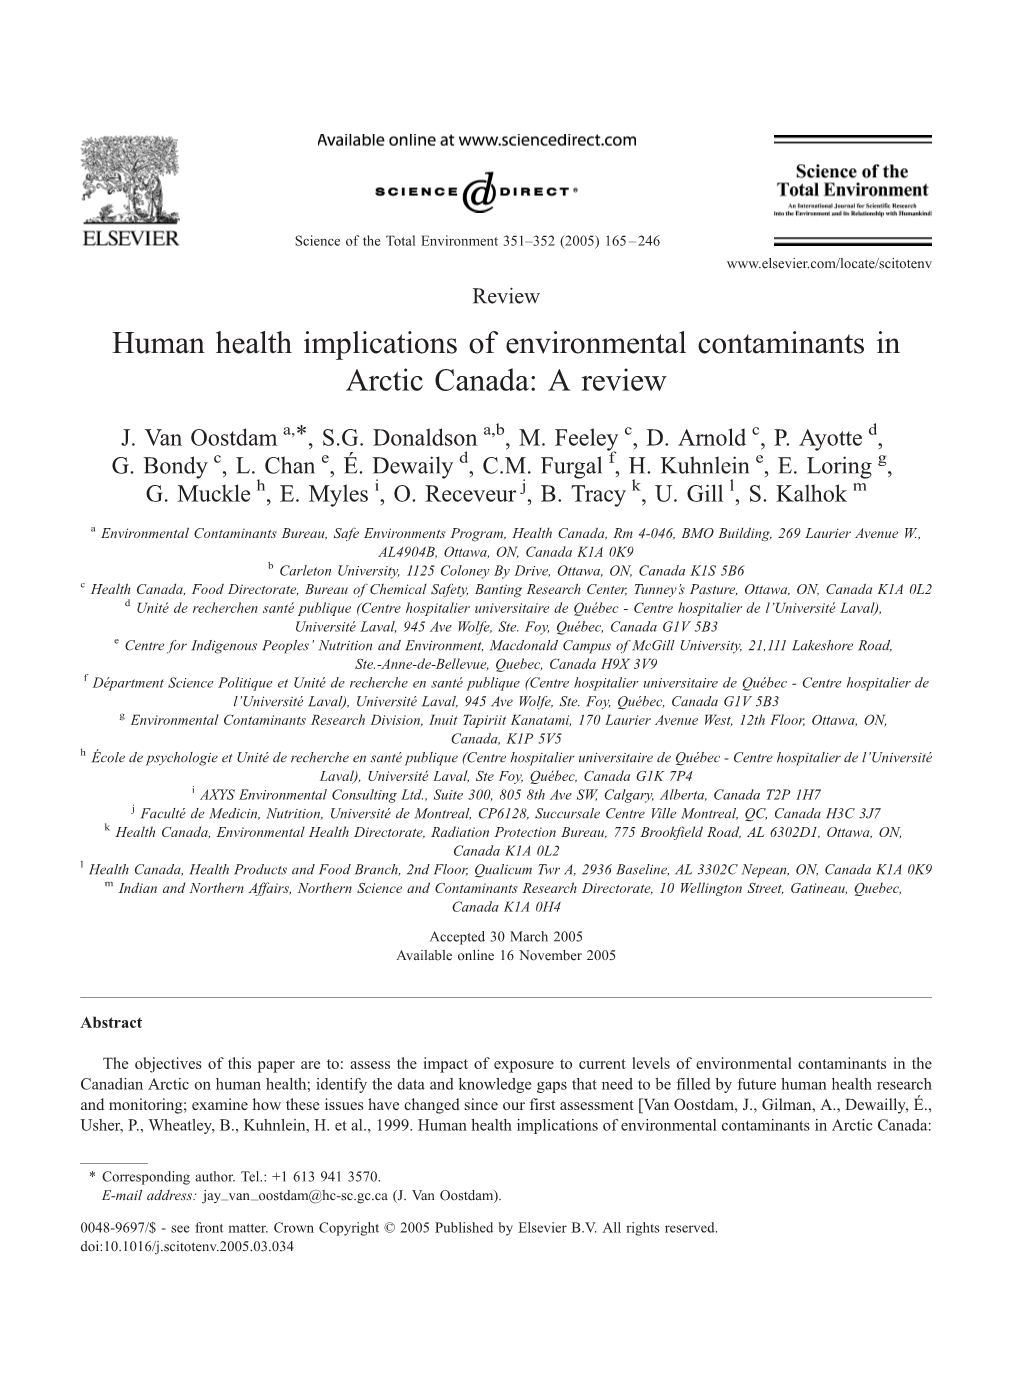 Human Health Implications of Environmental Contaminants in Arctic Canada: a Review